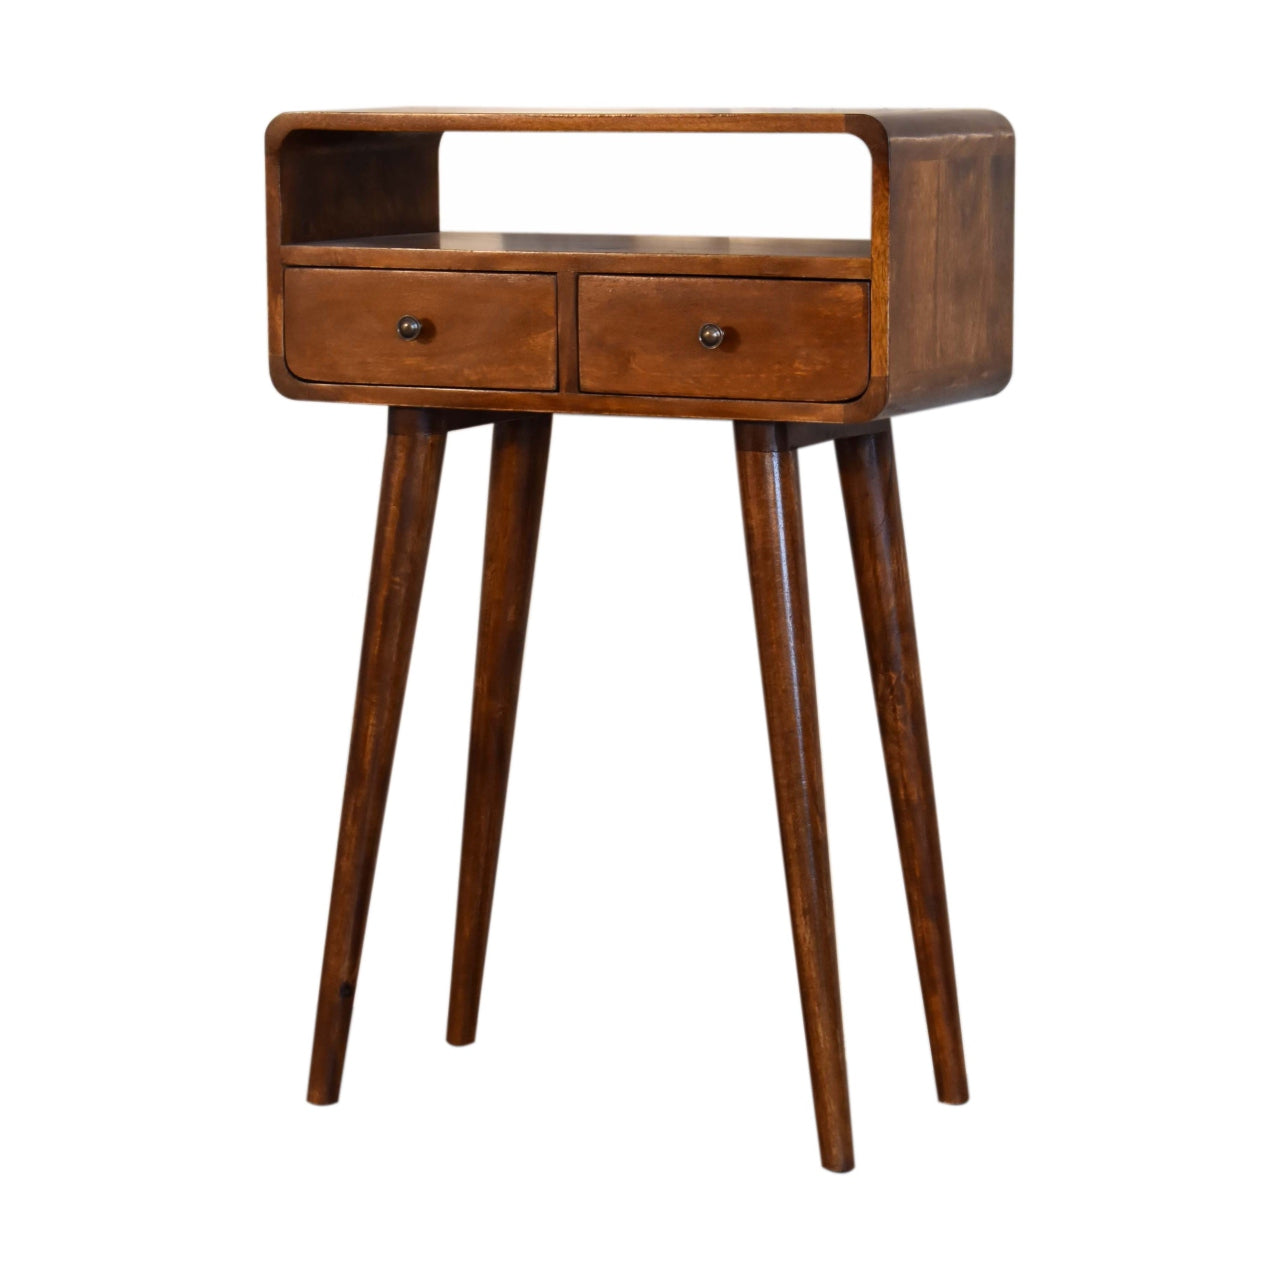 Century Handmade solid wood 2 drawer small console table in deep chestnut finish | malletandplane.com